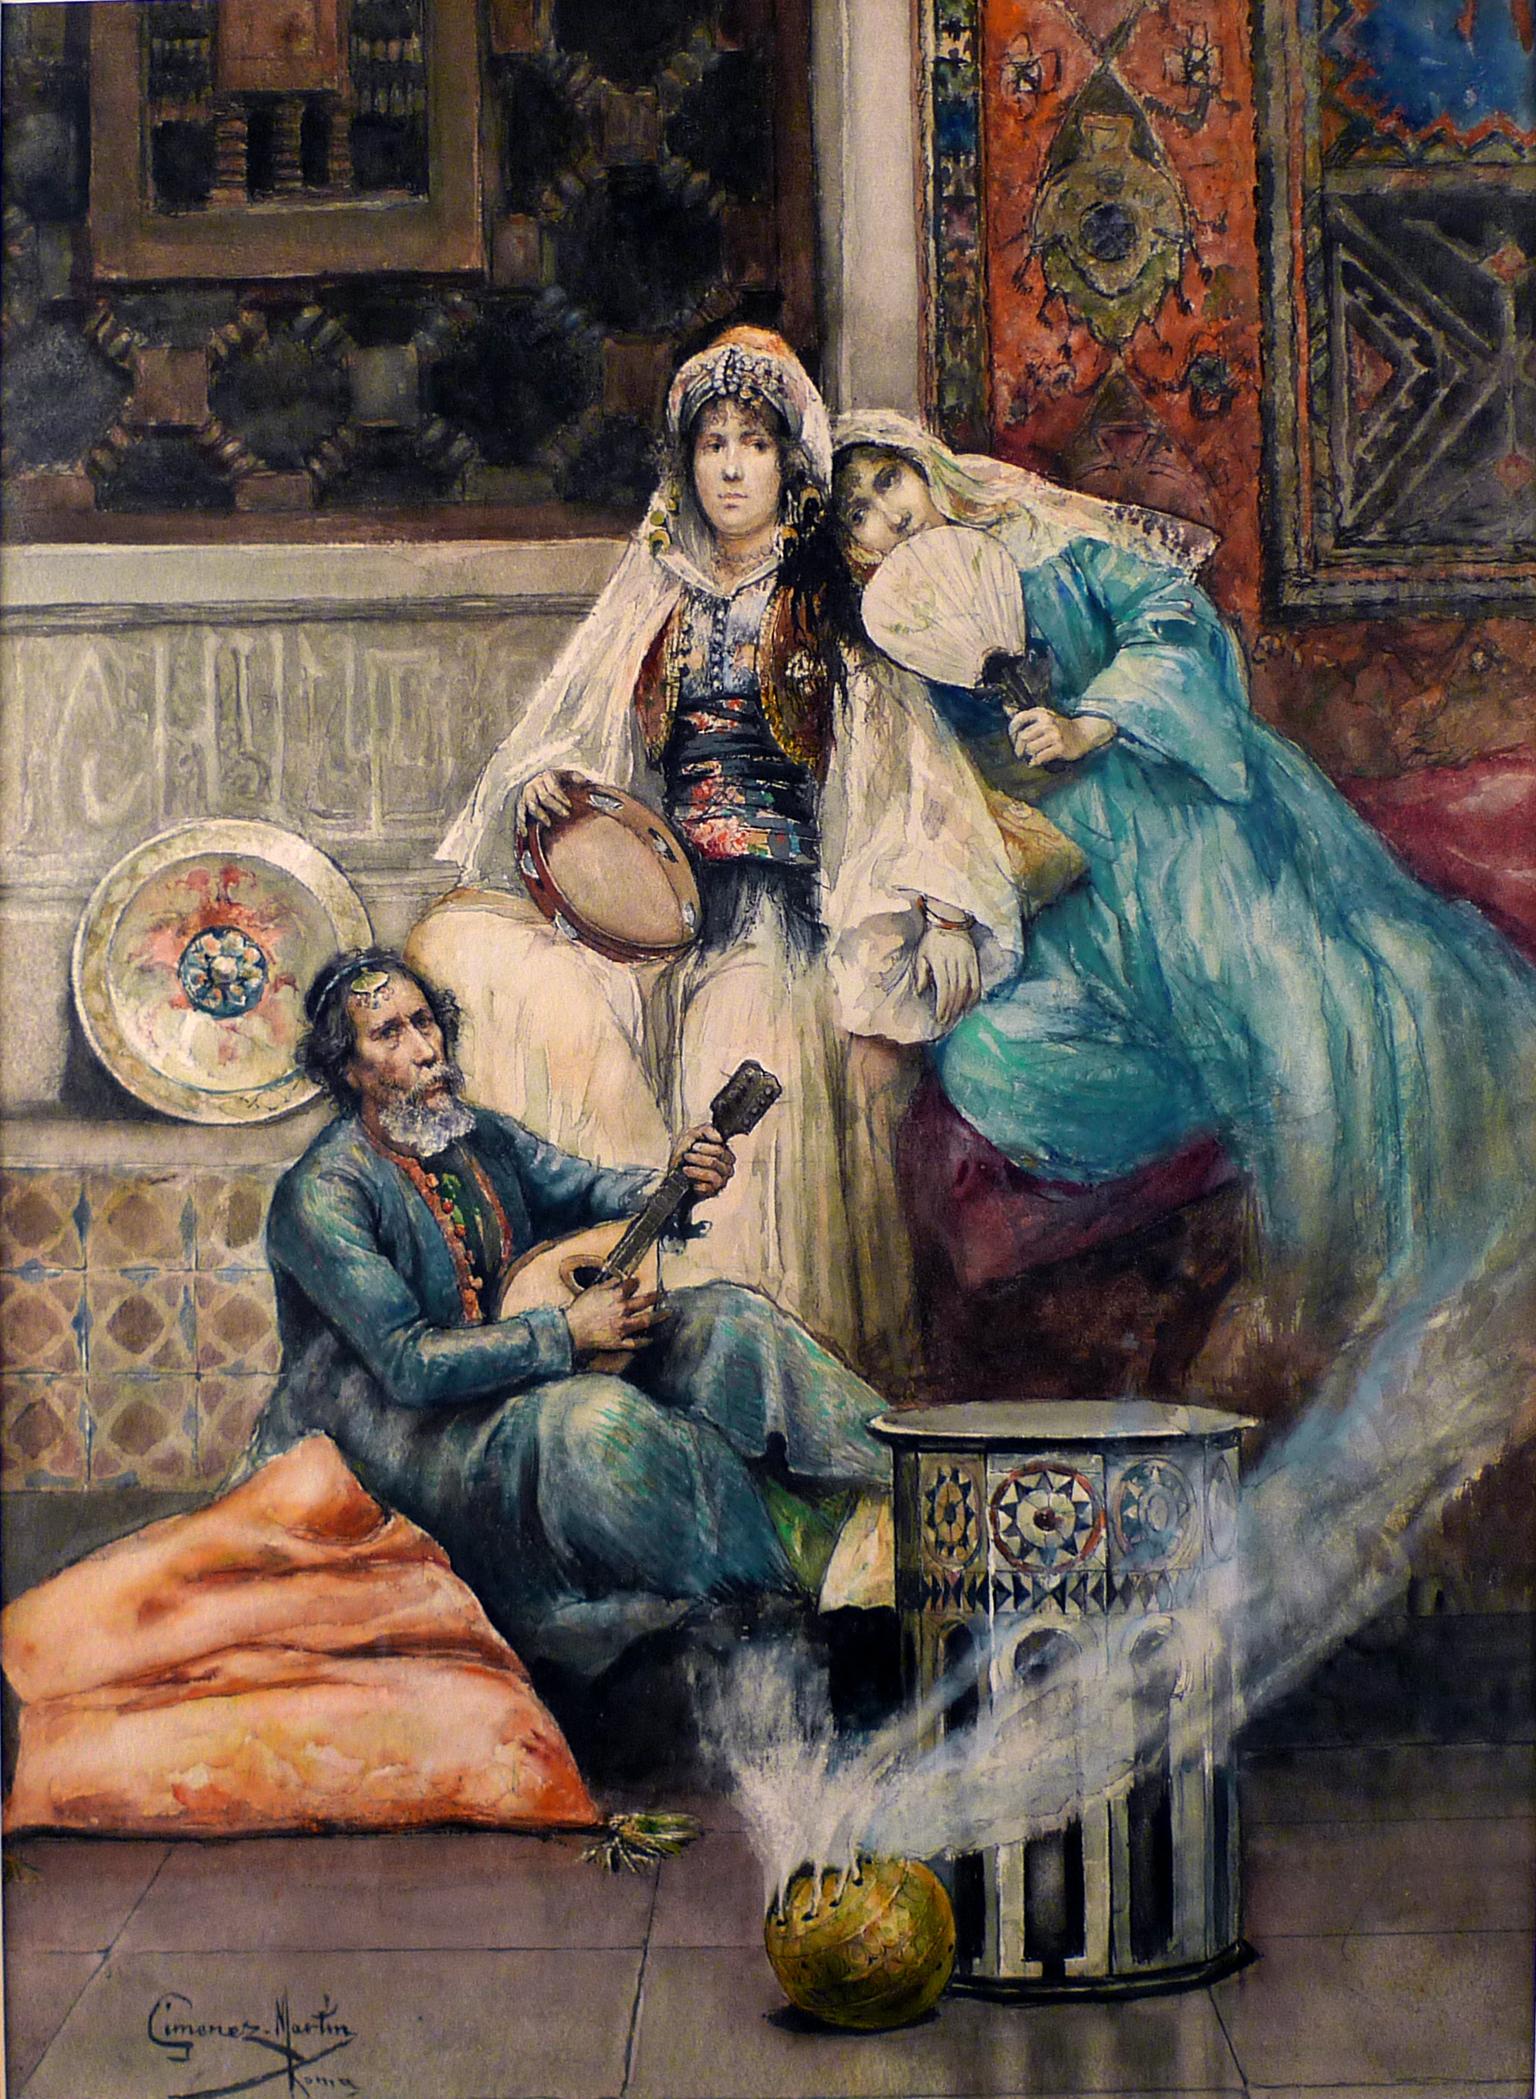 « The Mandolin Serenade », aquarelle sur carton du XIXe siècle de Gimnez Martn - Painting de Juan Giménez Martín 